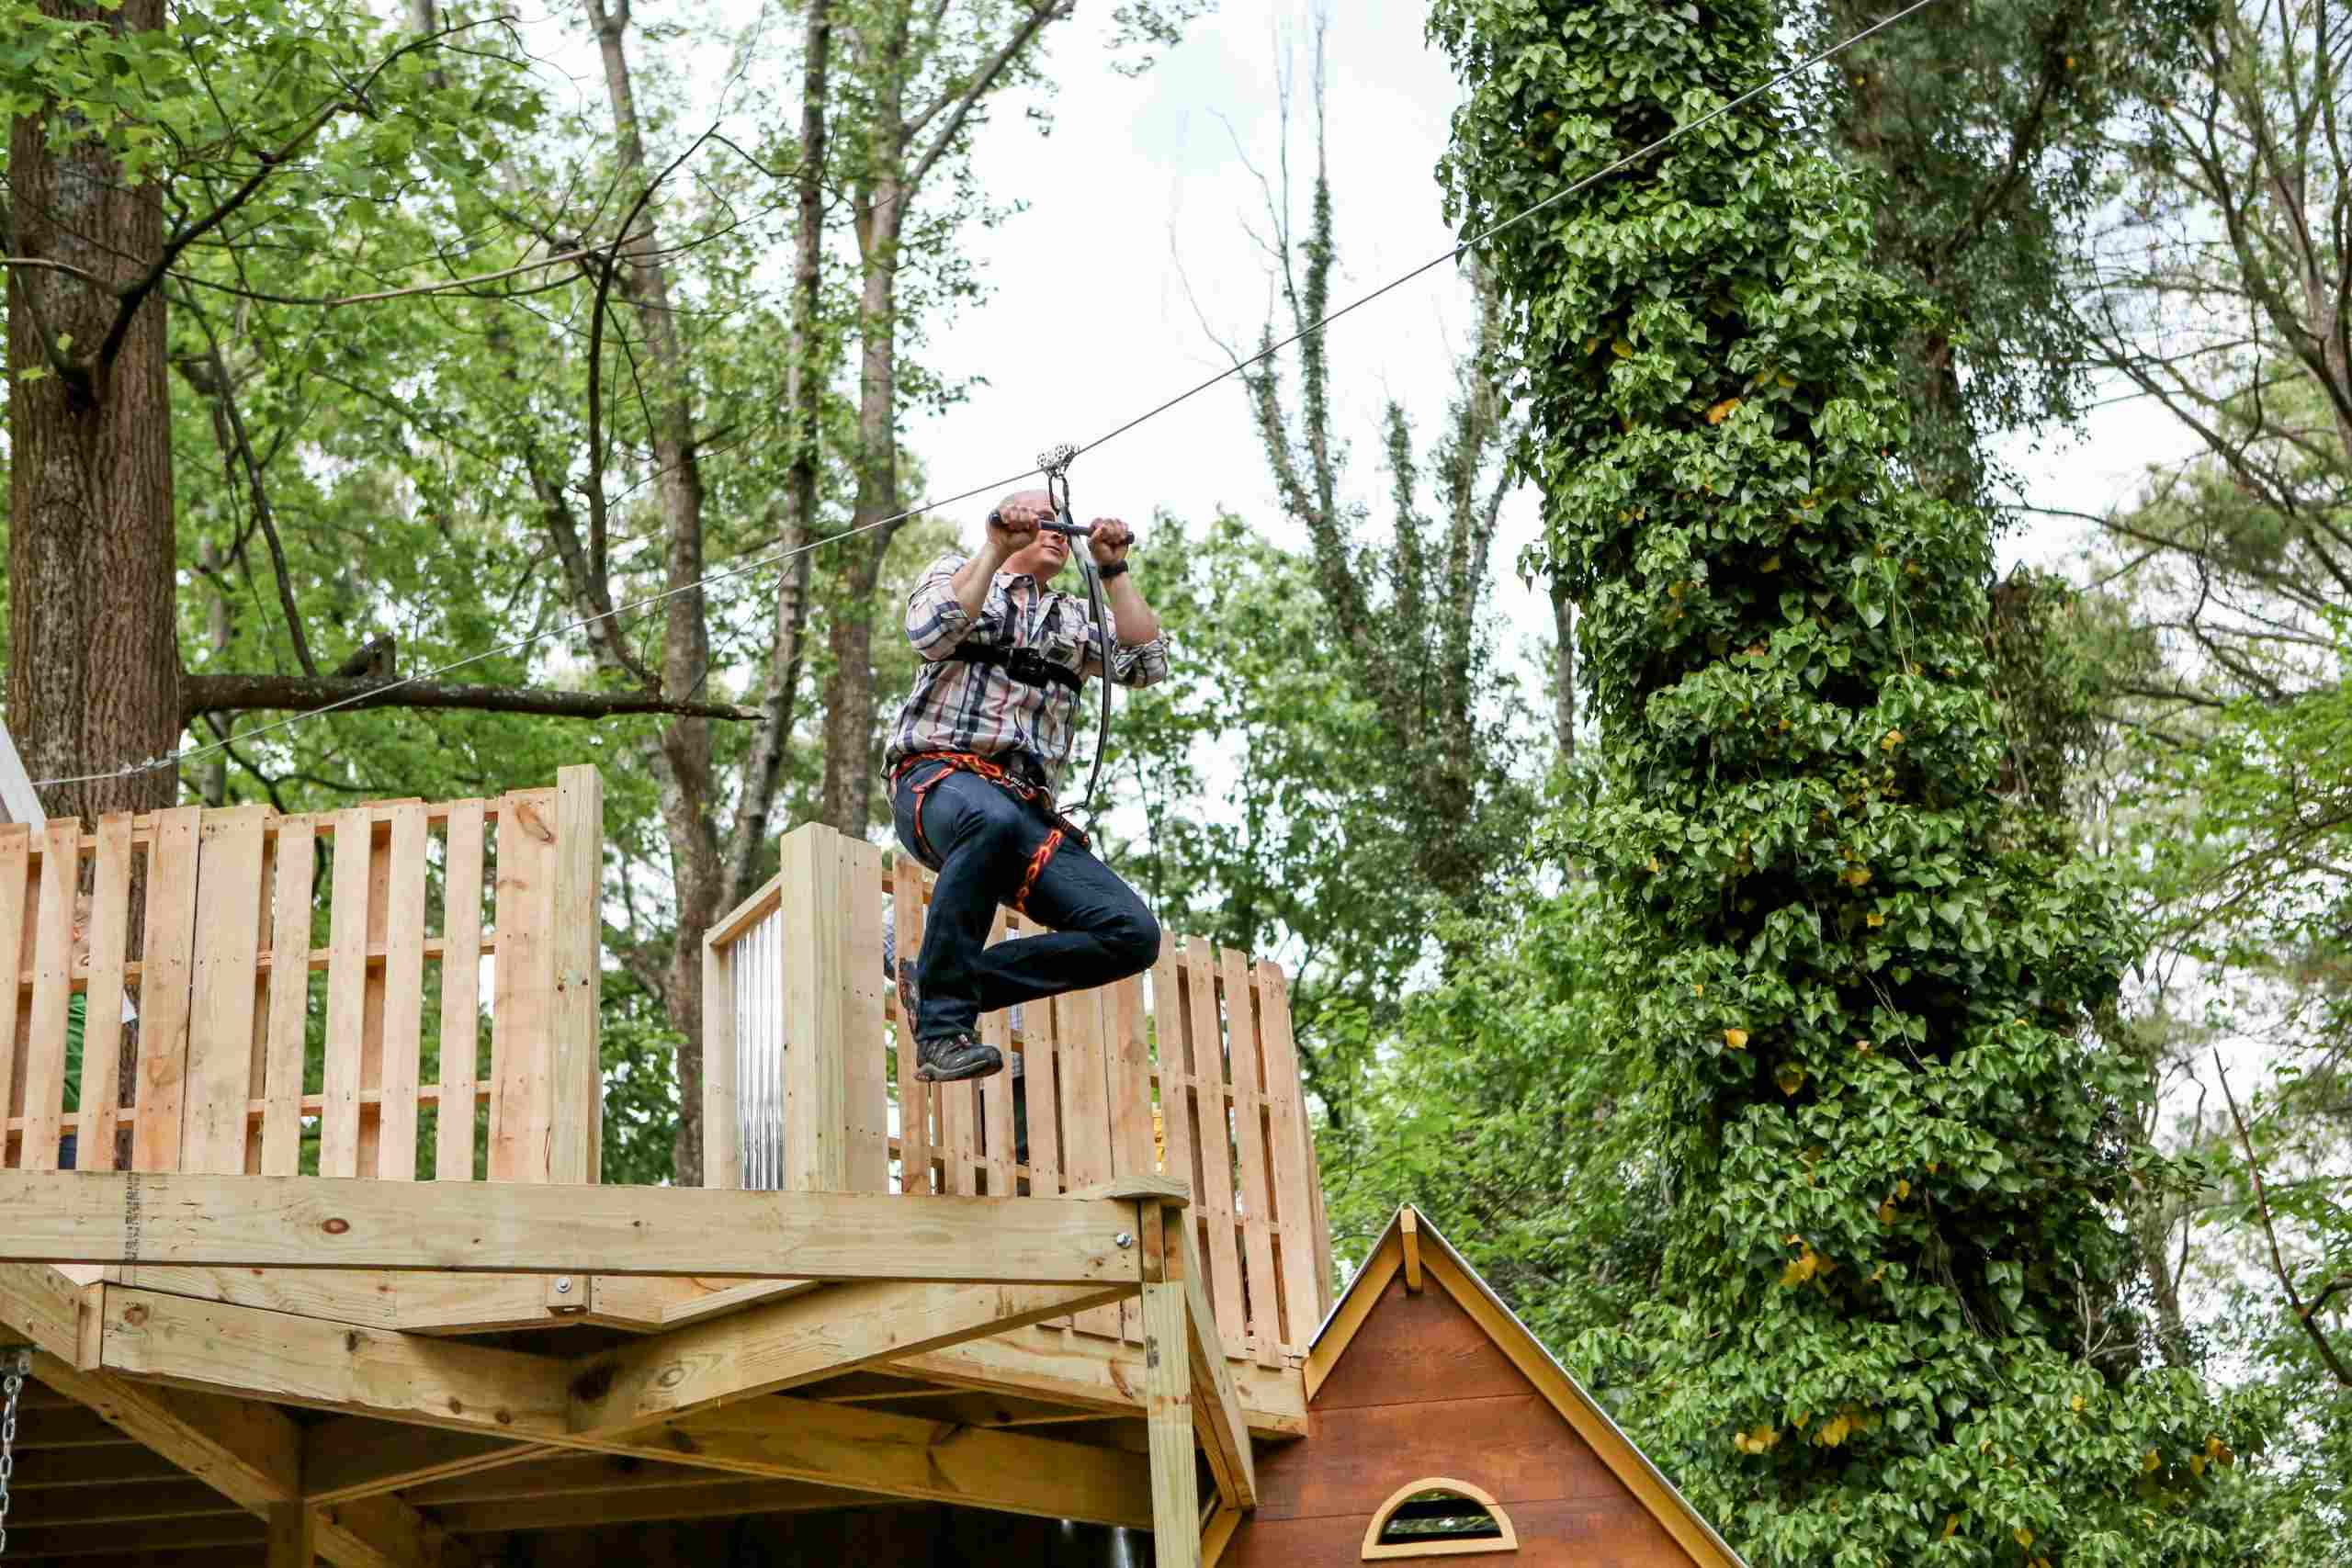 How To Build A Zipline In Your Backyard